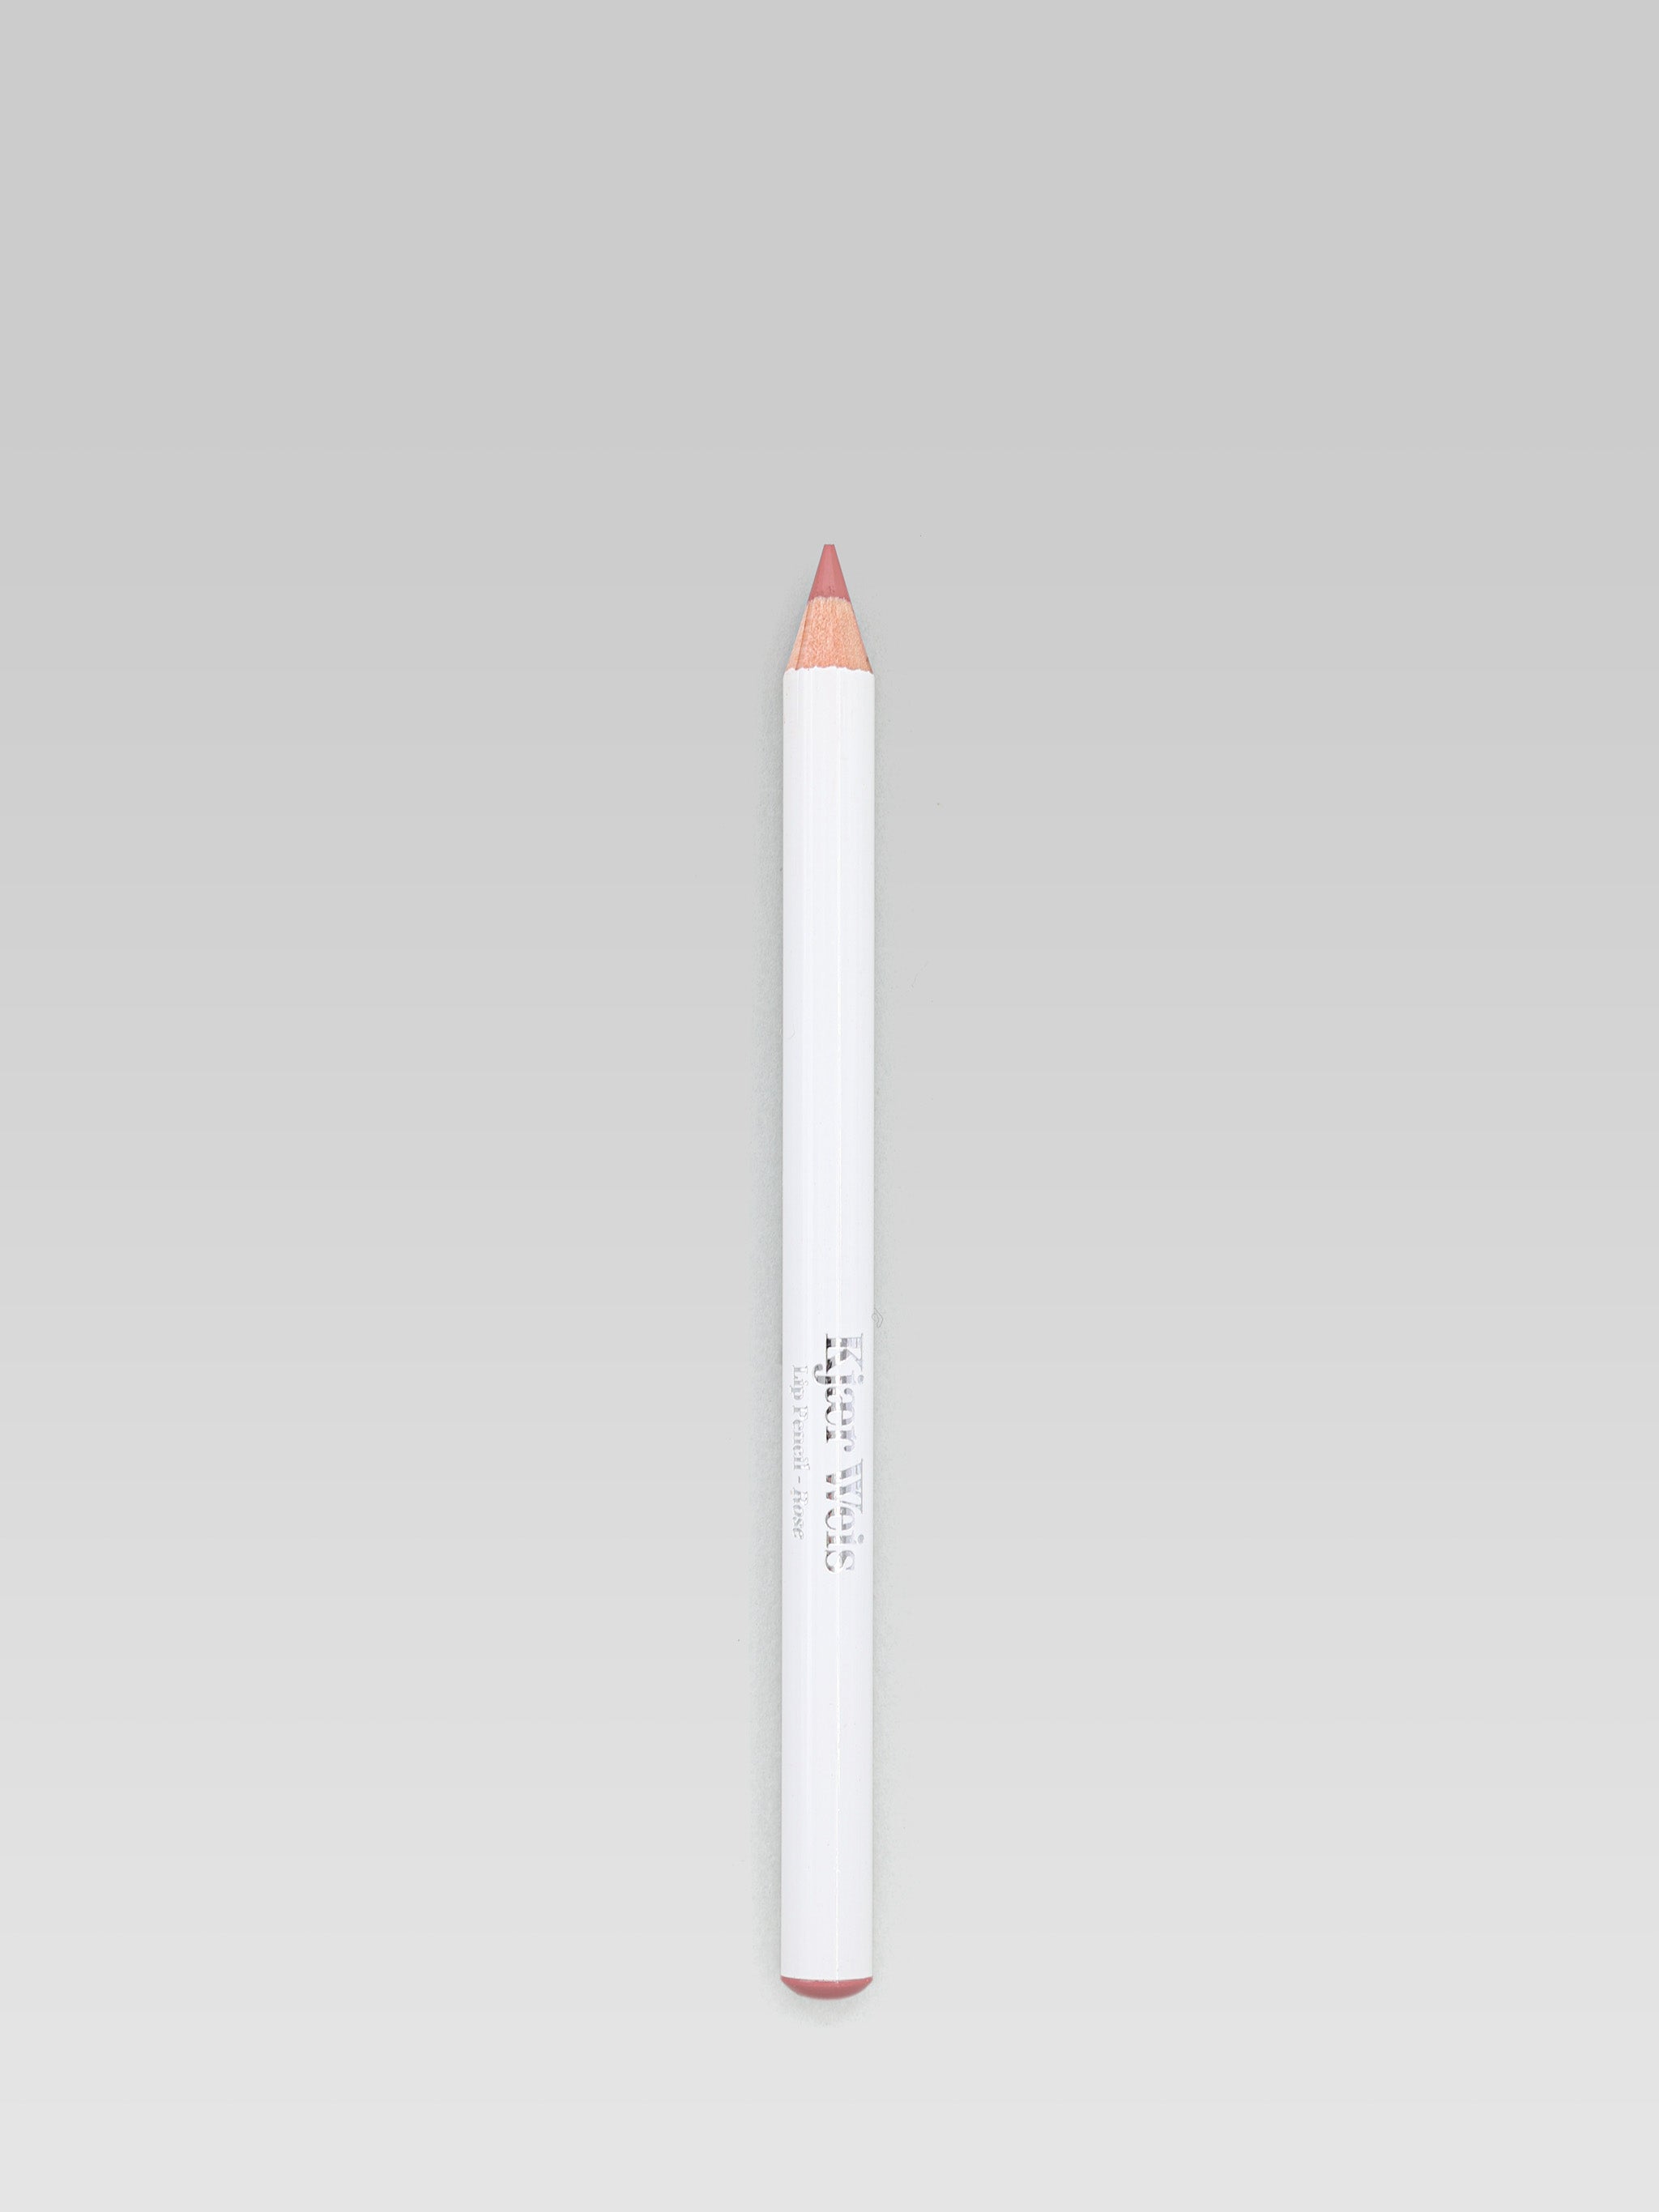 Kjaer Weis Lip Pencil in Rose